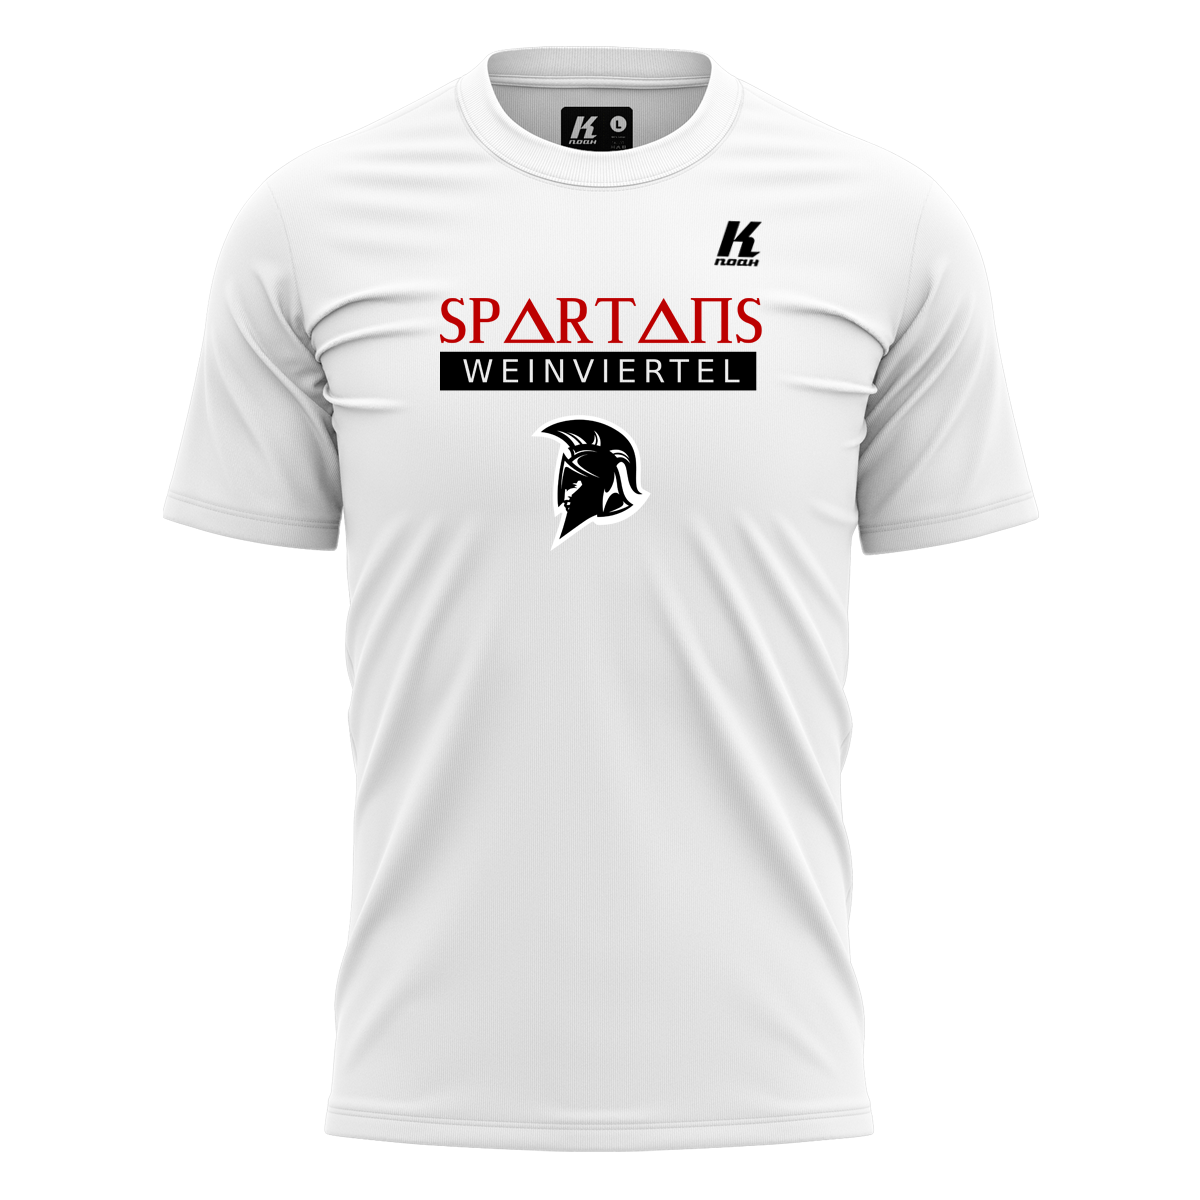 Spartans Fan Tee "Legacy" white